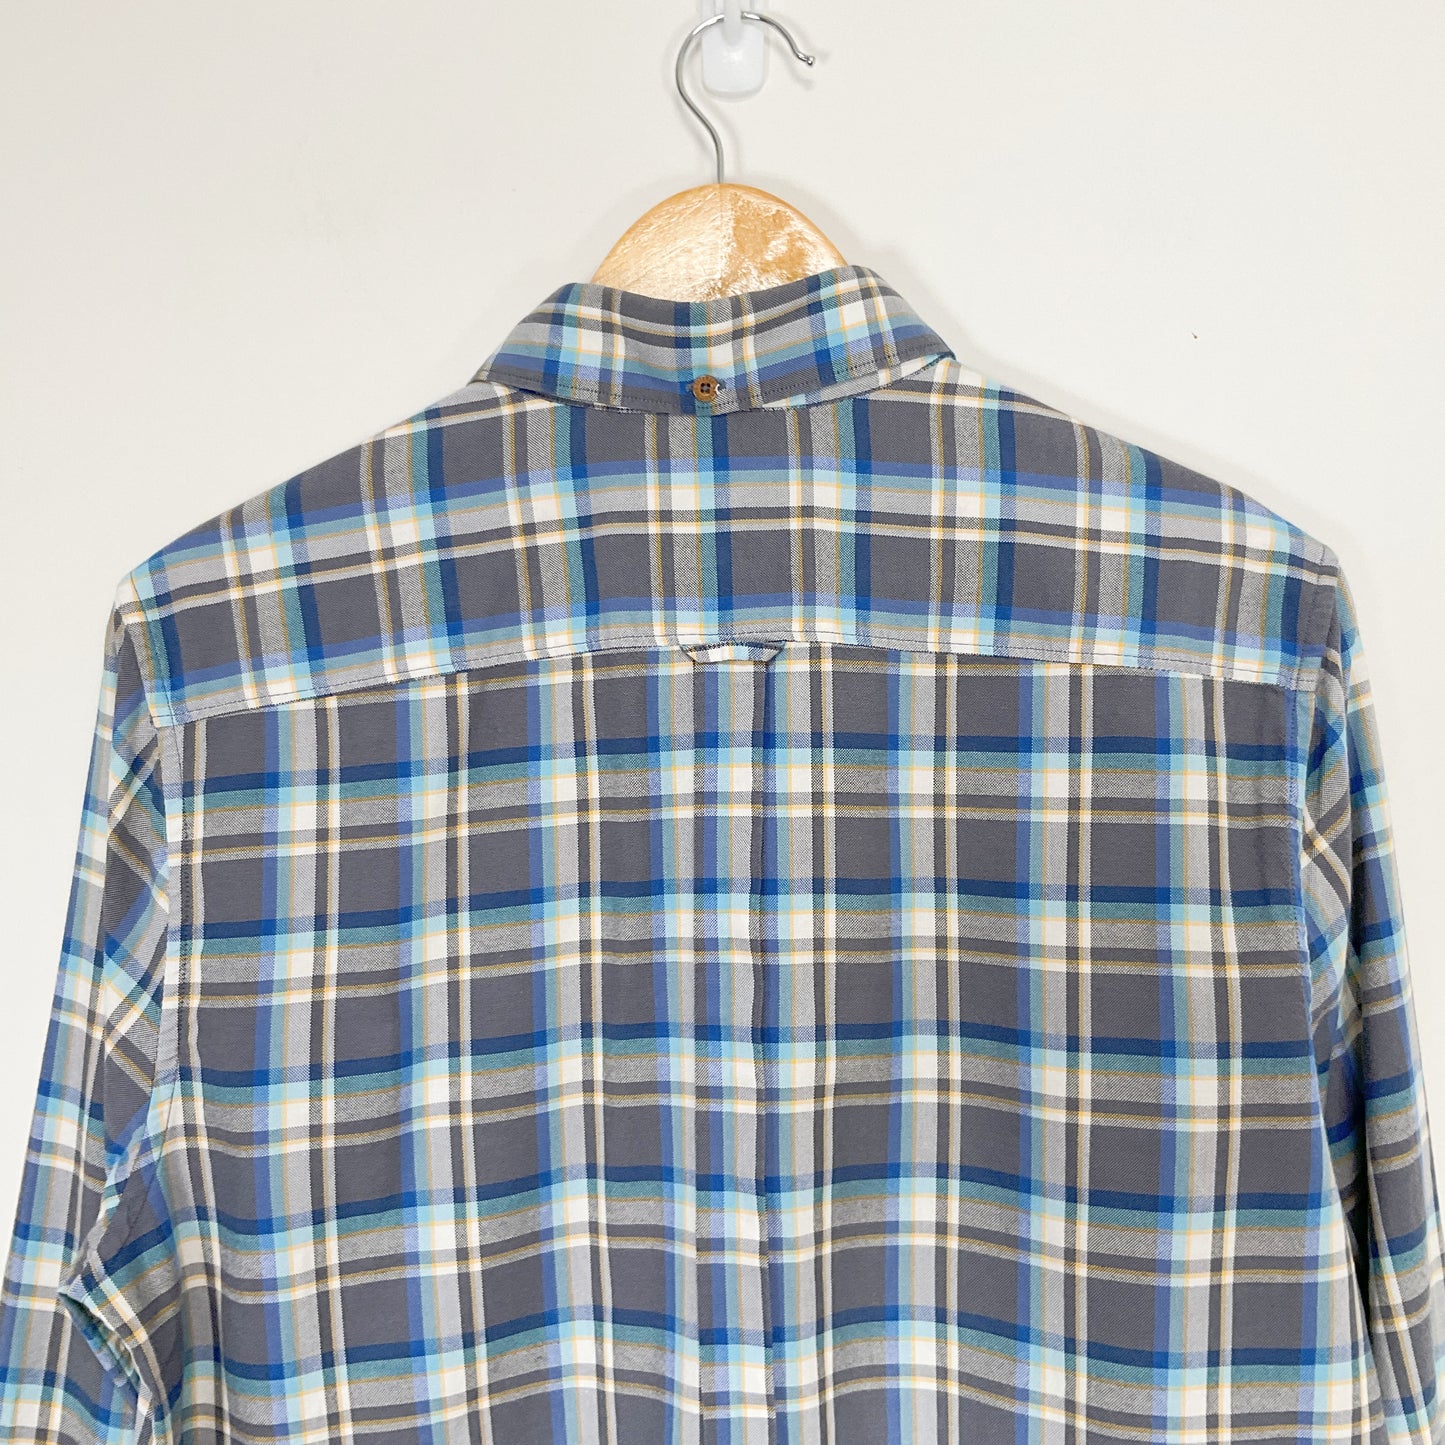 Ben Sherman - Pure Cotton Windowpane Check Shirt